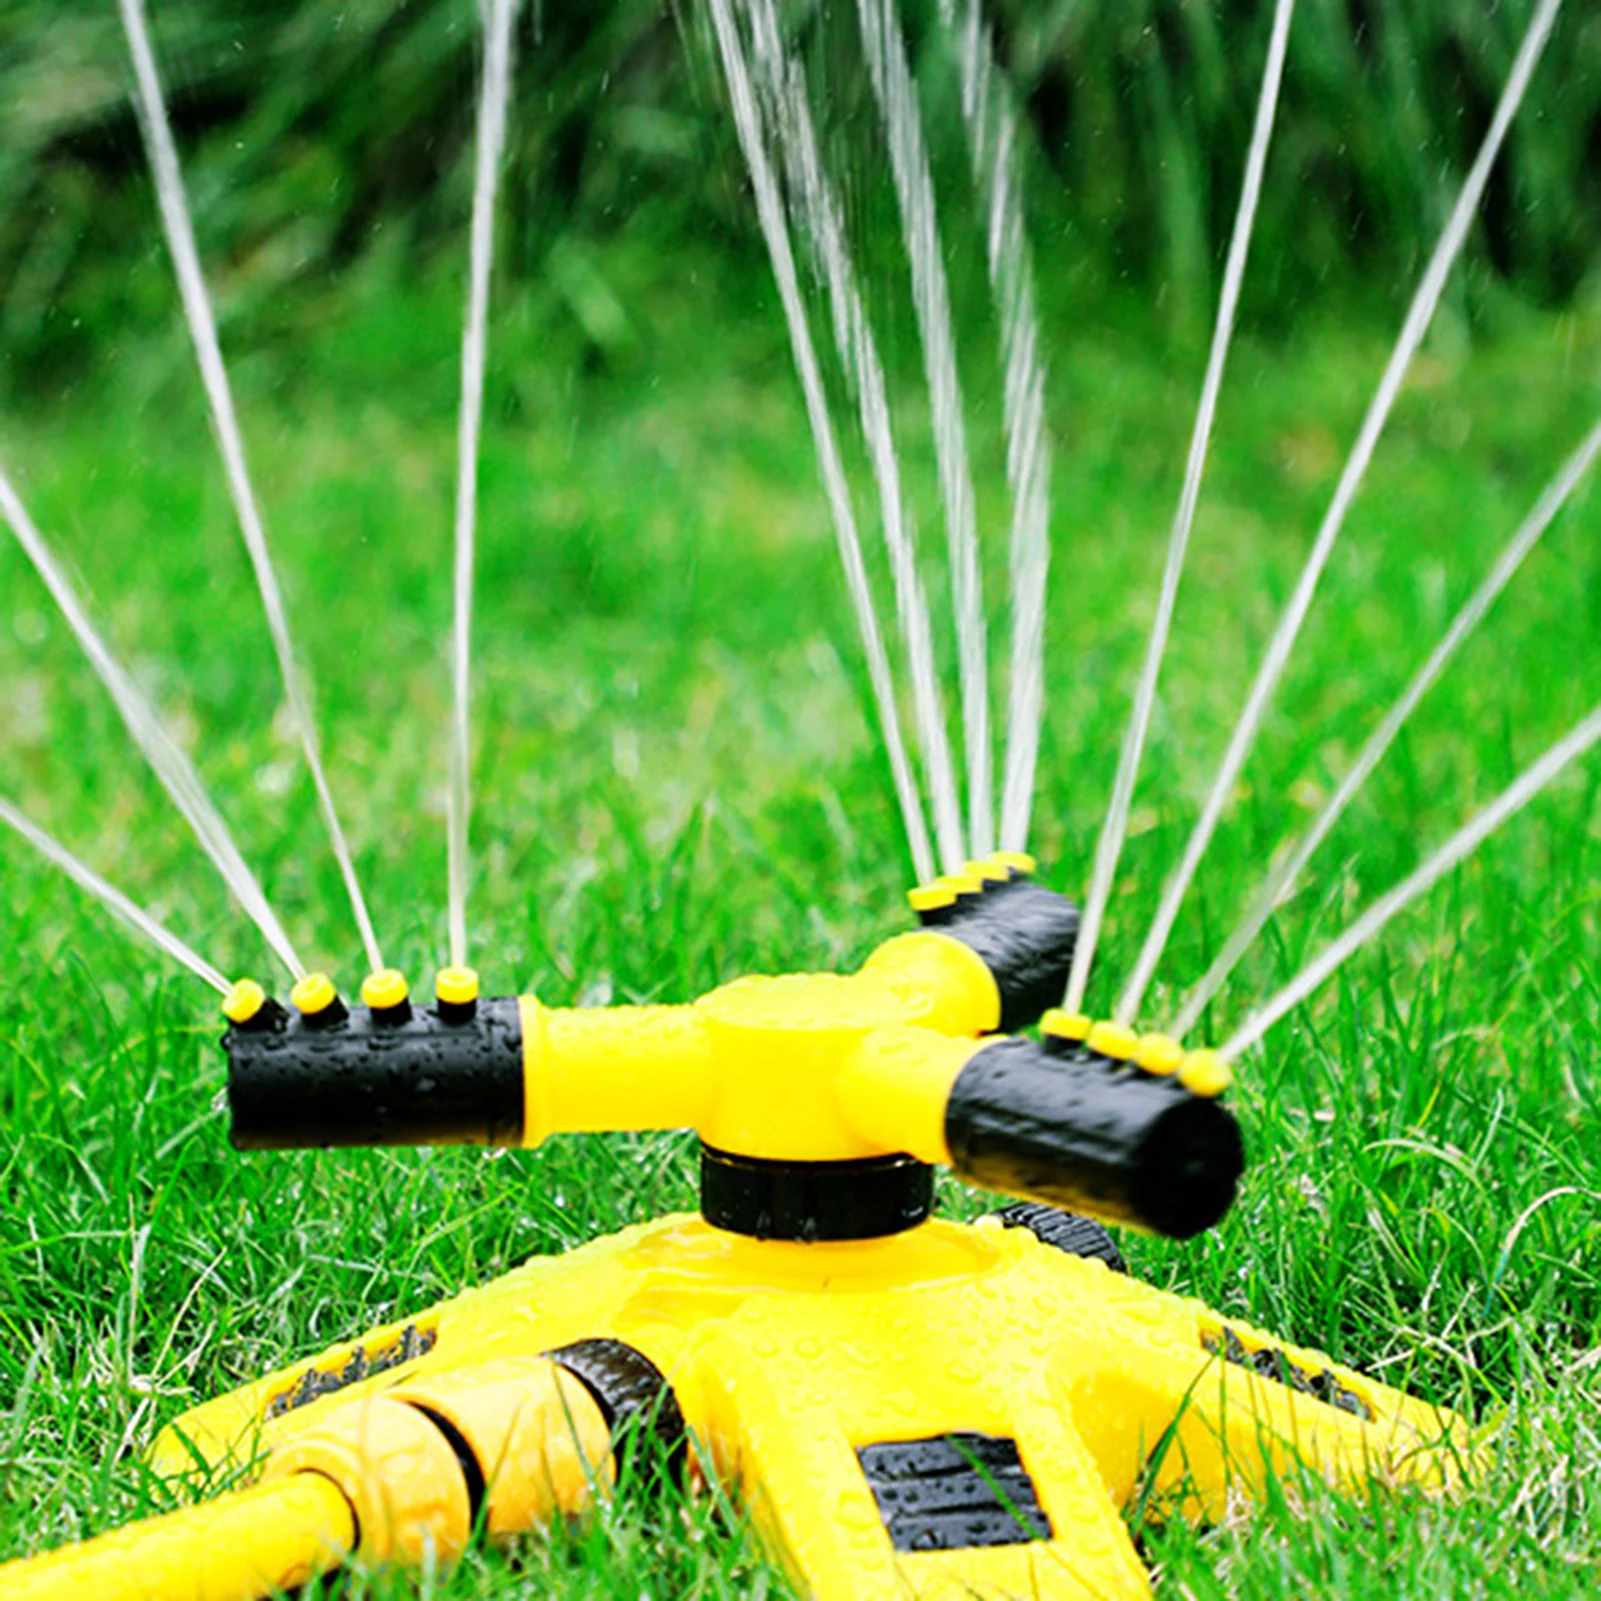 

Garden Lawn Sprinkler 360 Degree Automatic Rotating Sprinkler Nozzle Nursery Irrigation Rotating Trigeminal Sprinkler Tandem